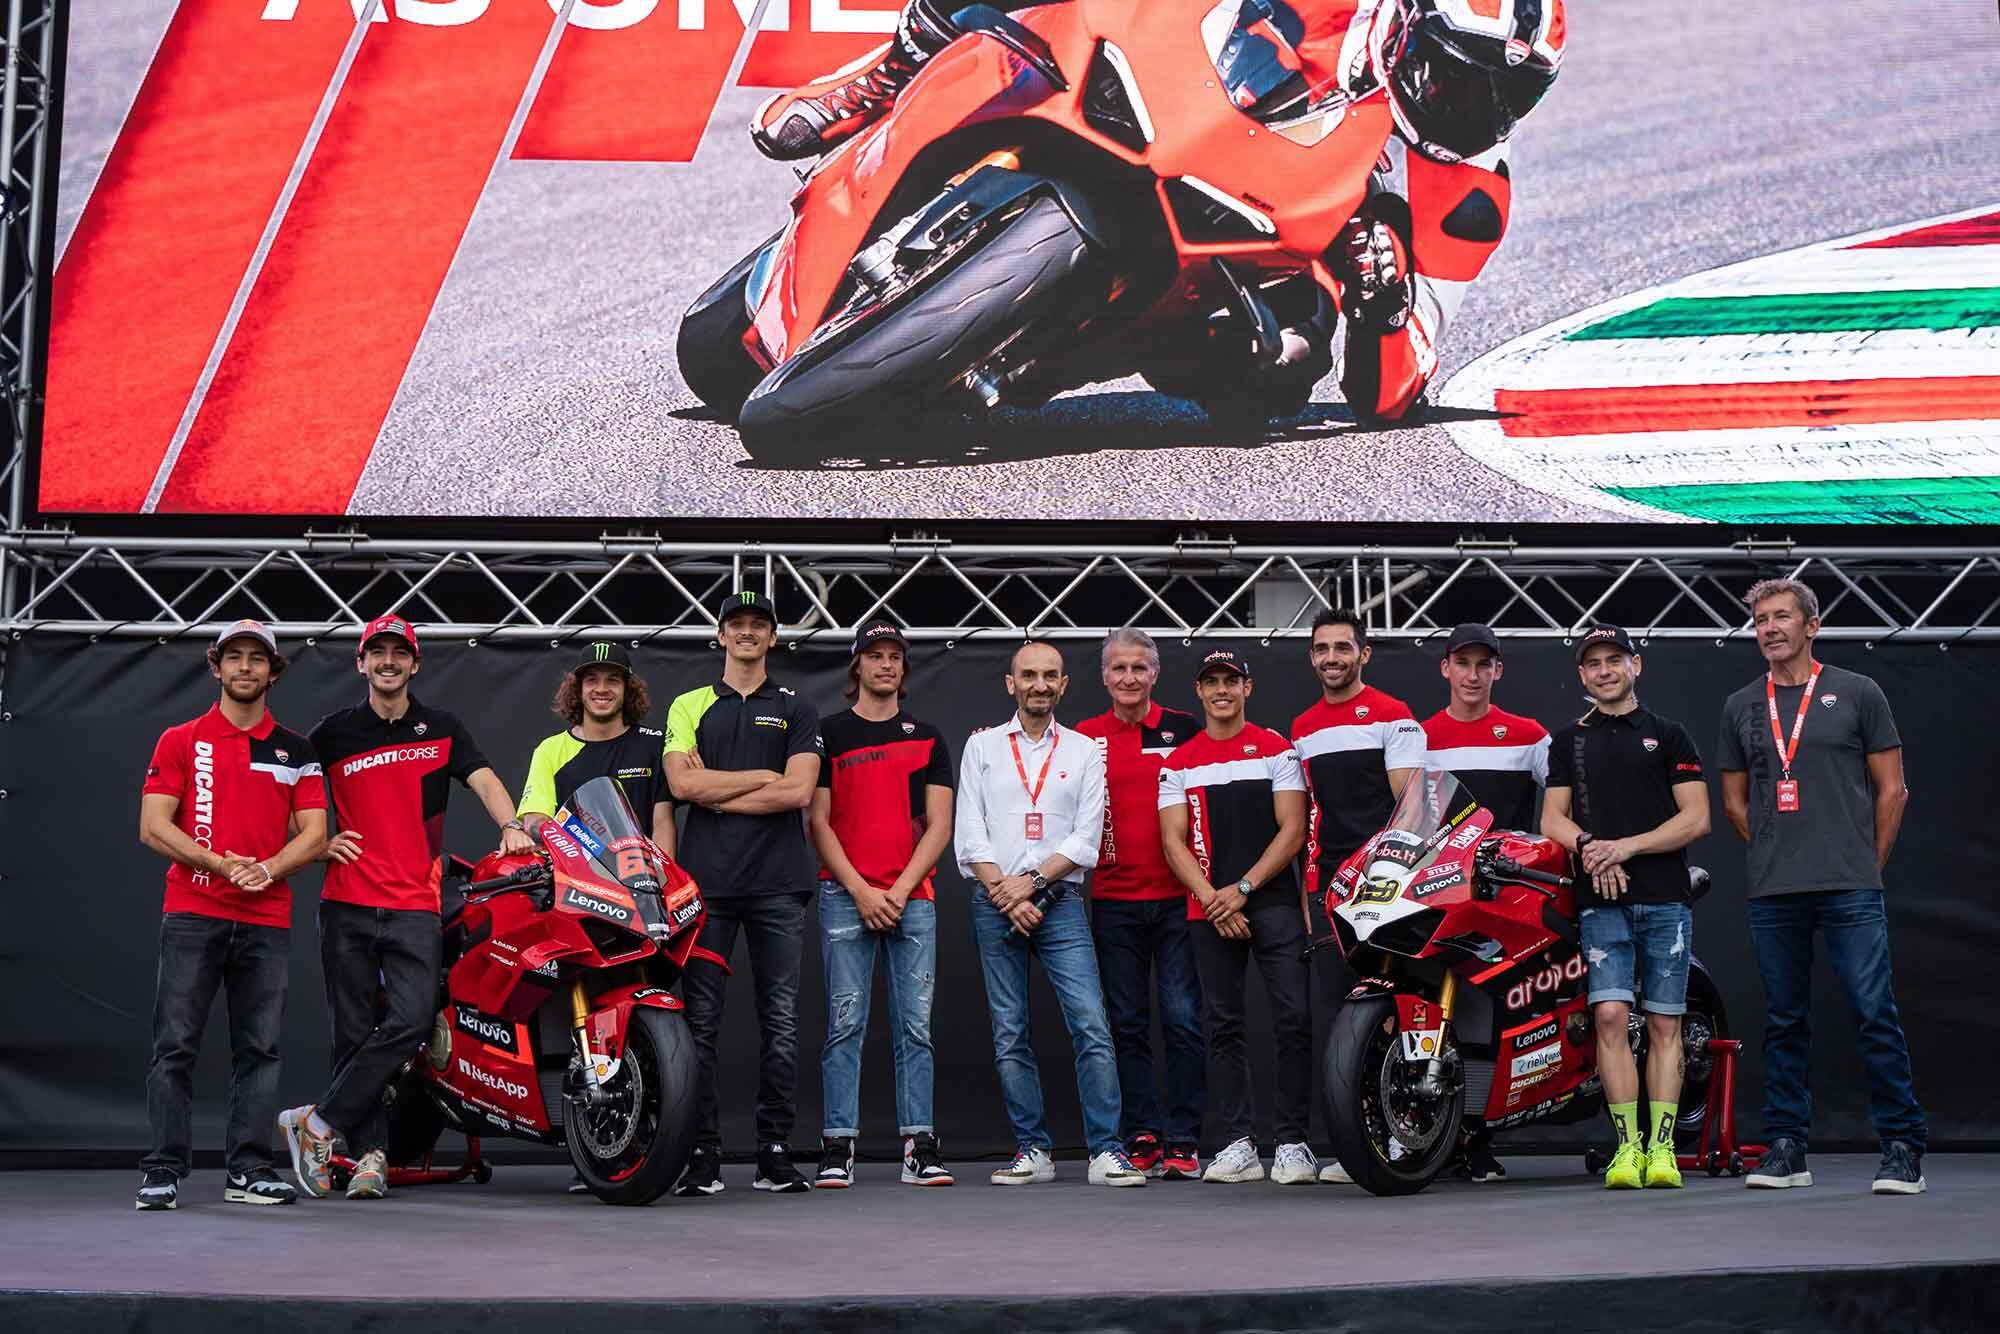 A group of serious Ducati riders: Bastianini, Bagnaia, Bezzecchi, Marini, Bulega, Domenicali, Ciabatti, Rinaldi, Pirro, Oliver Bayliss, Bautista, and Troy Bayliss.